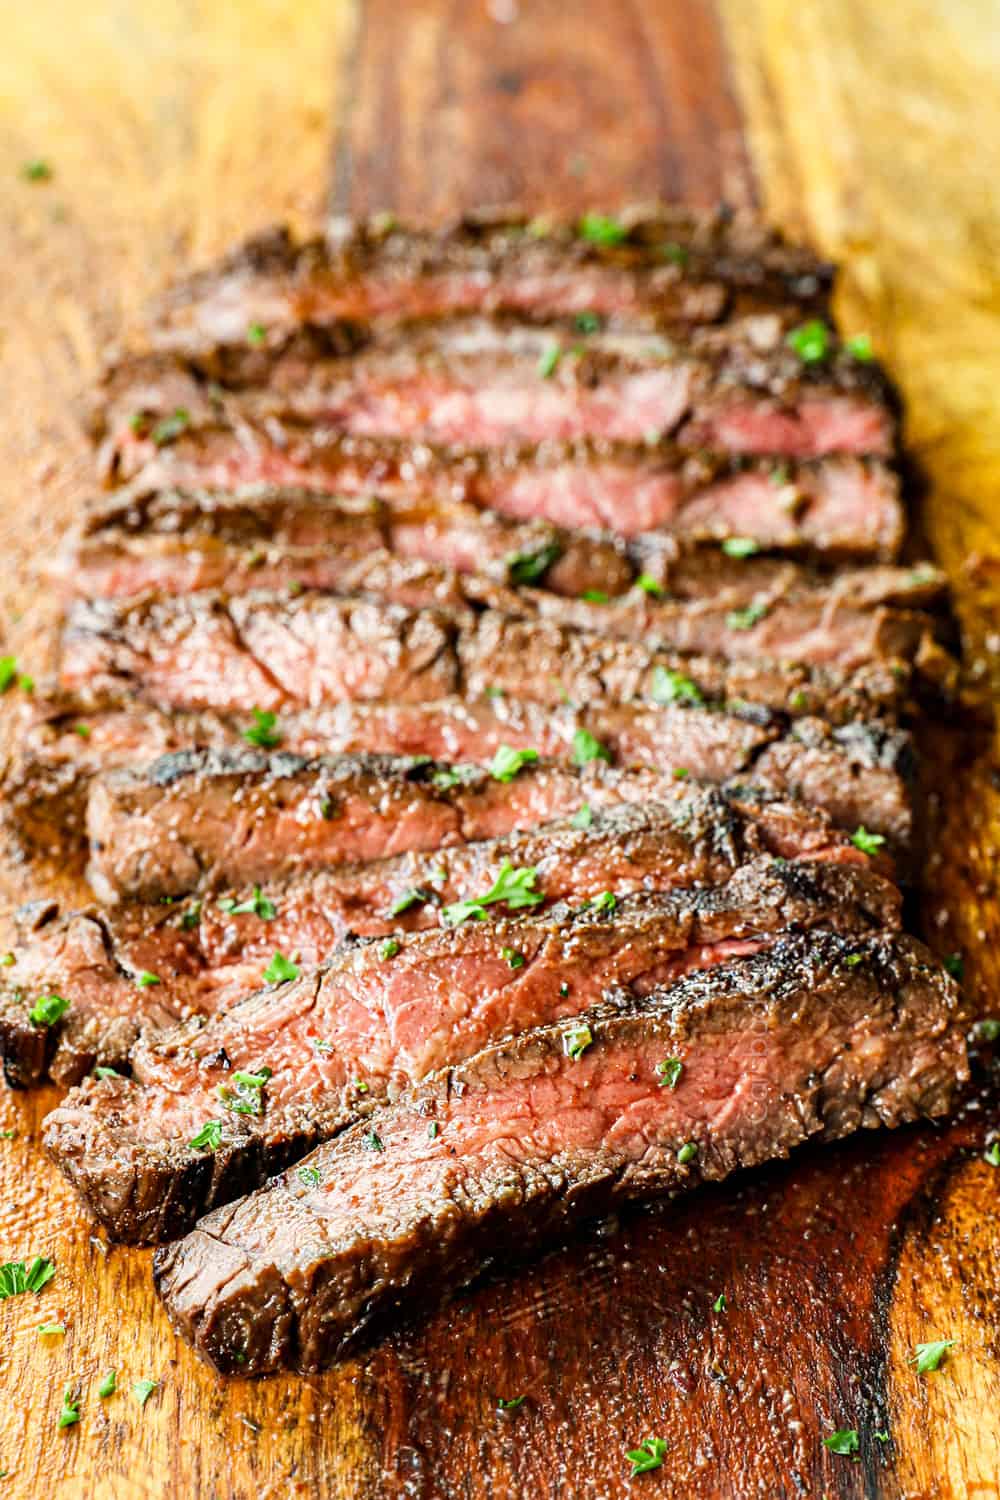 Discover more than 59 skirt steak super hot